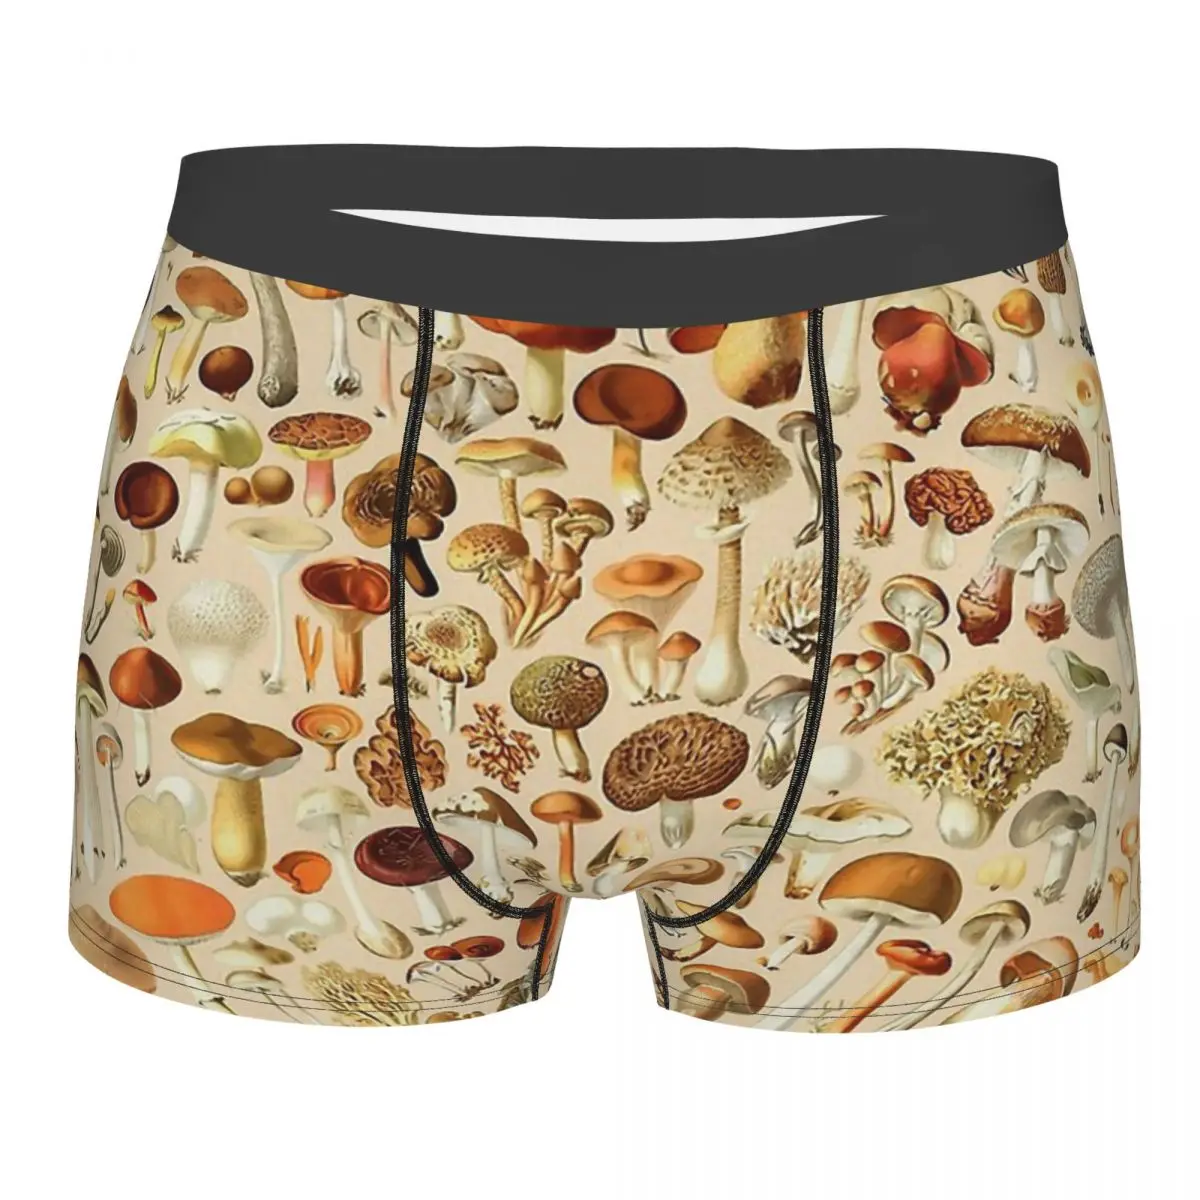 

Vintage Designs Collection Mushroom Mushrooms Forest Underpants Panties Male Underwear Comfortable Shorts Boxer Briefs